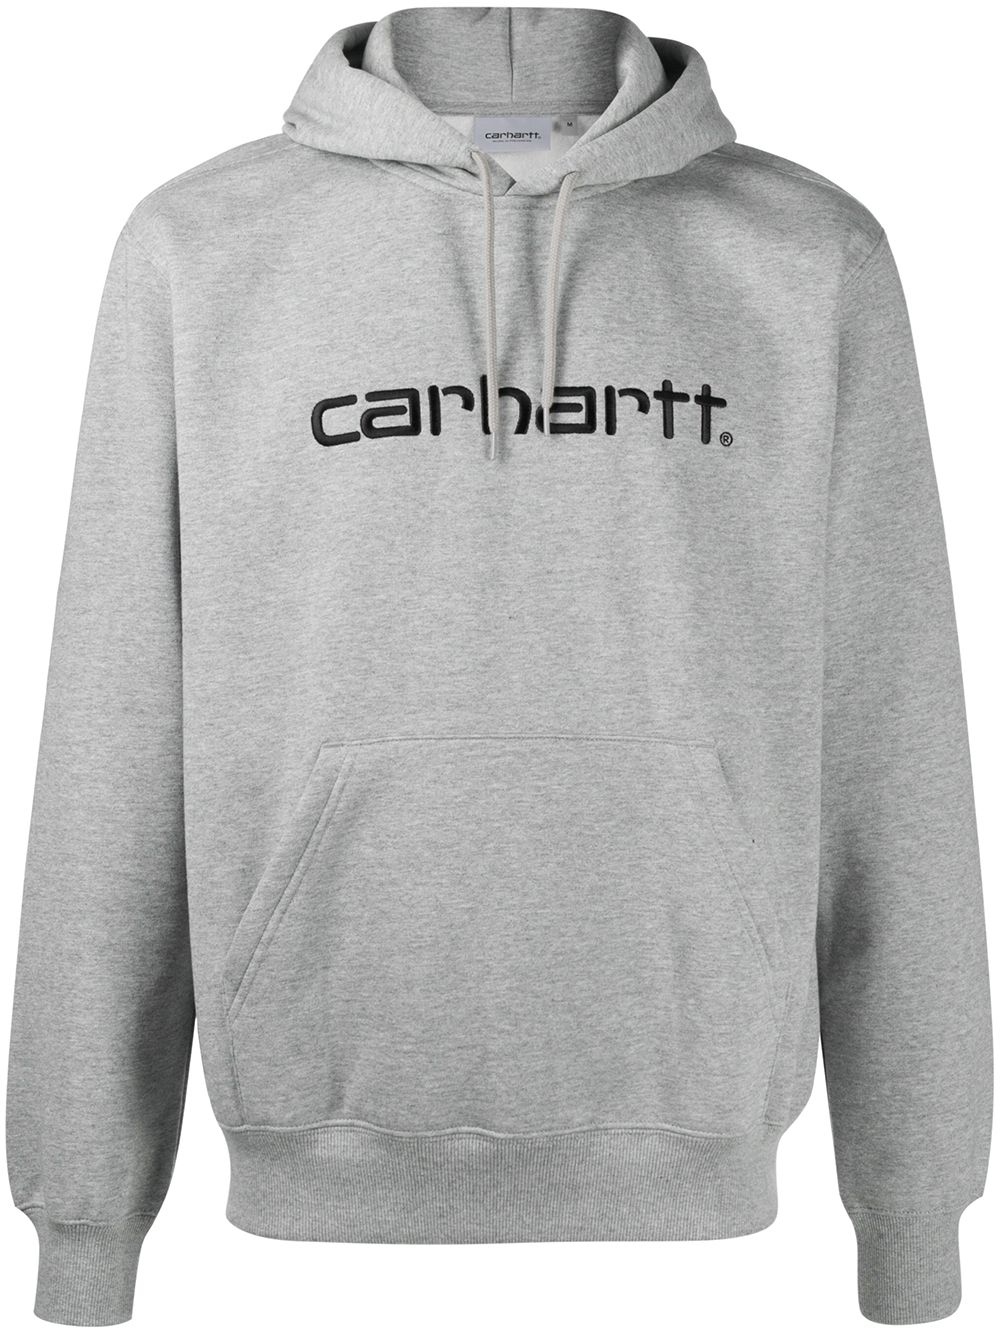 фото Carhartt wip худи с вышитым логотипом